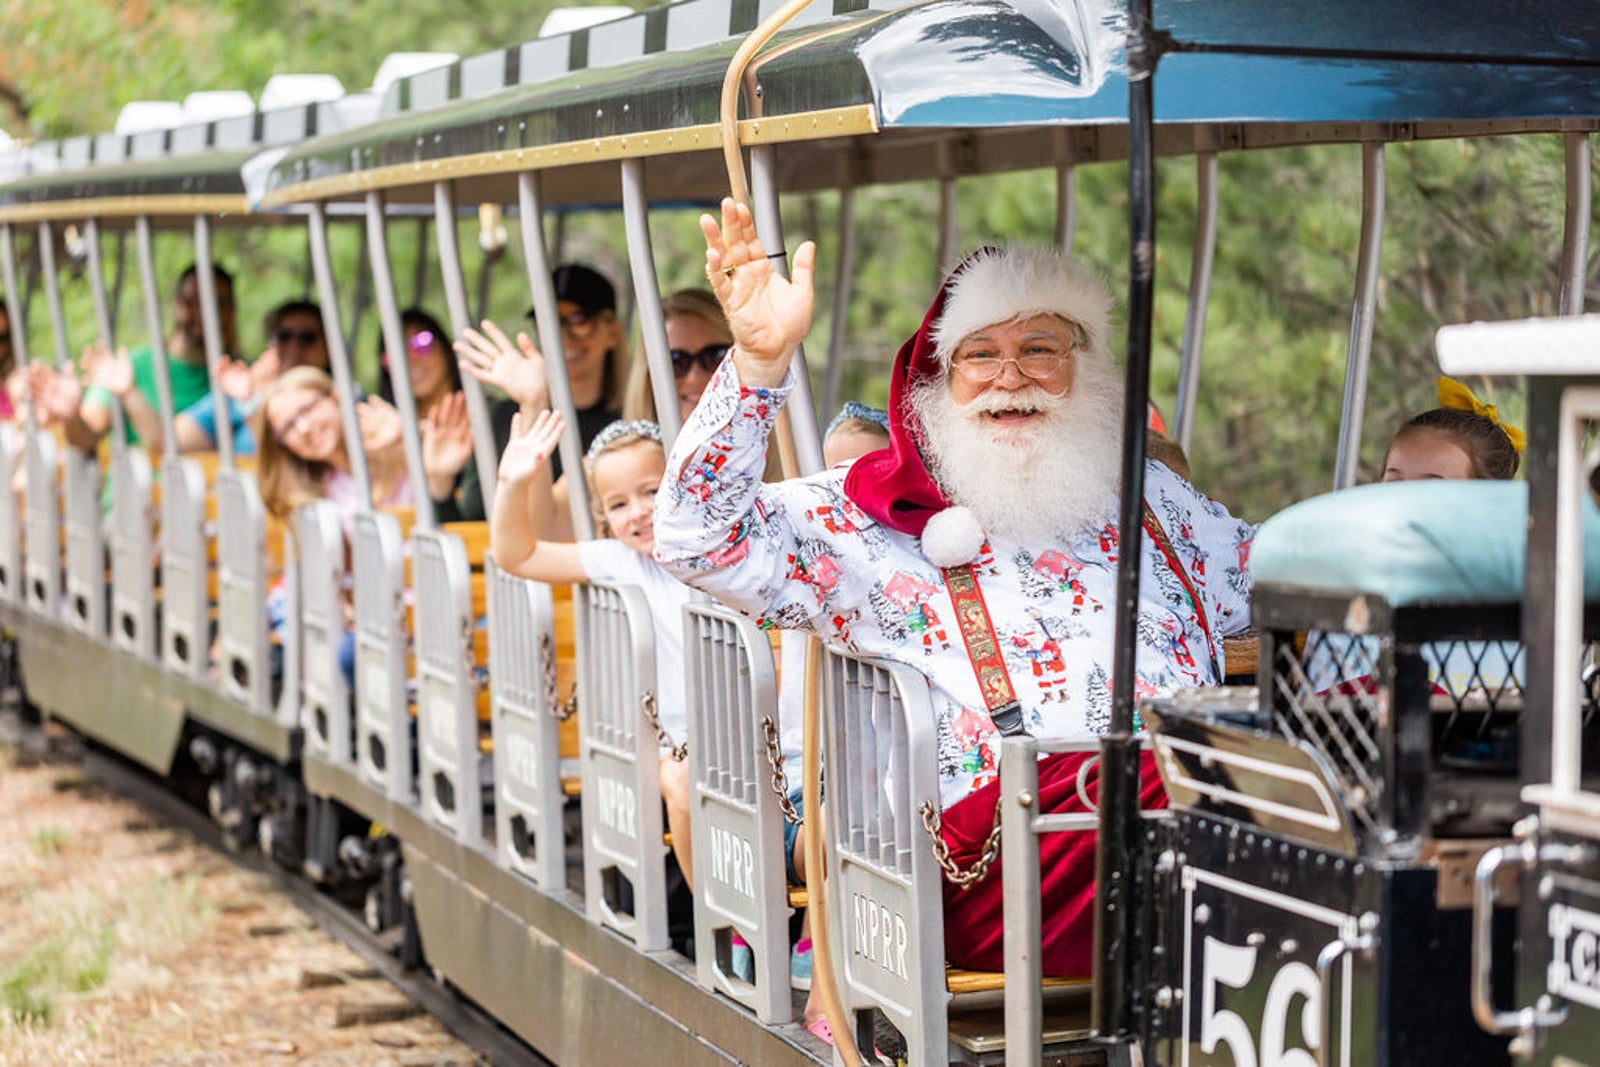 Santa riding on a train